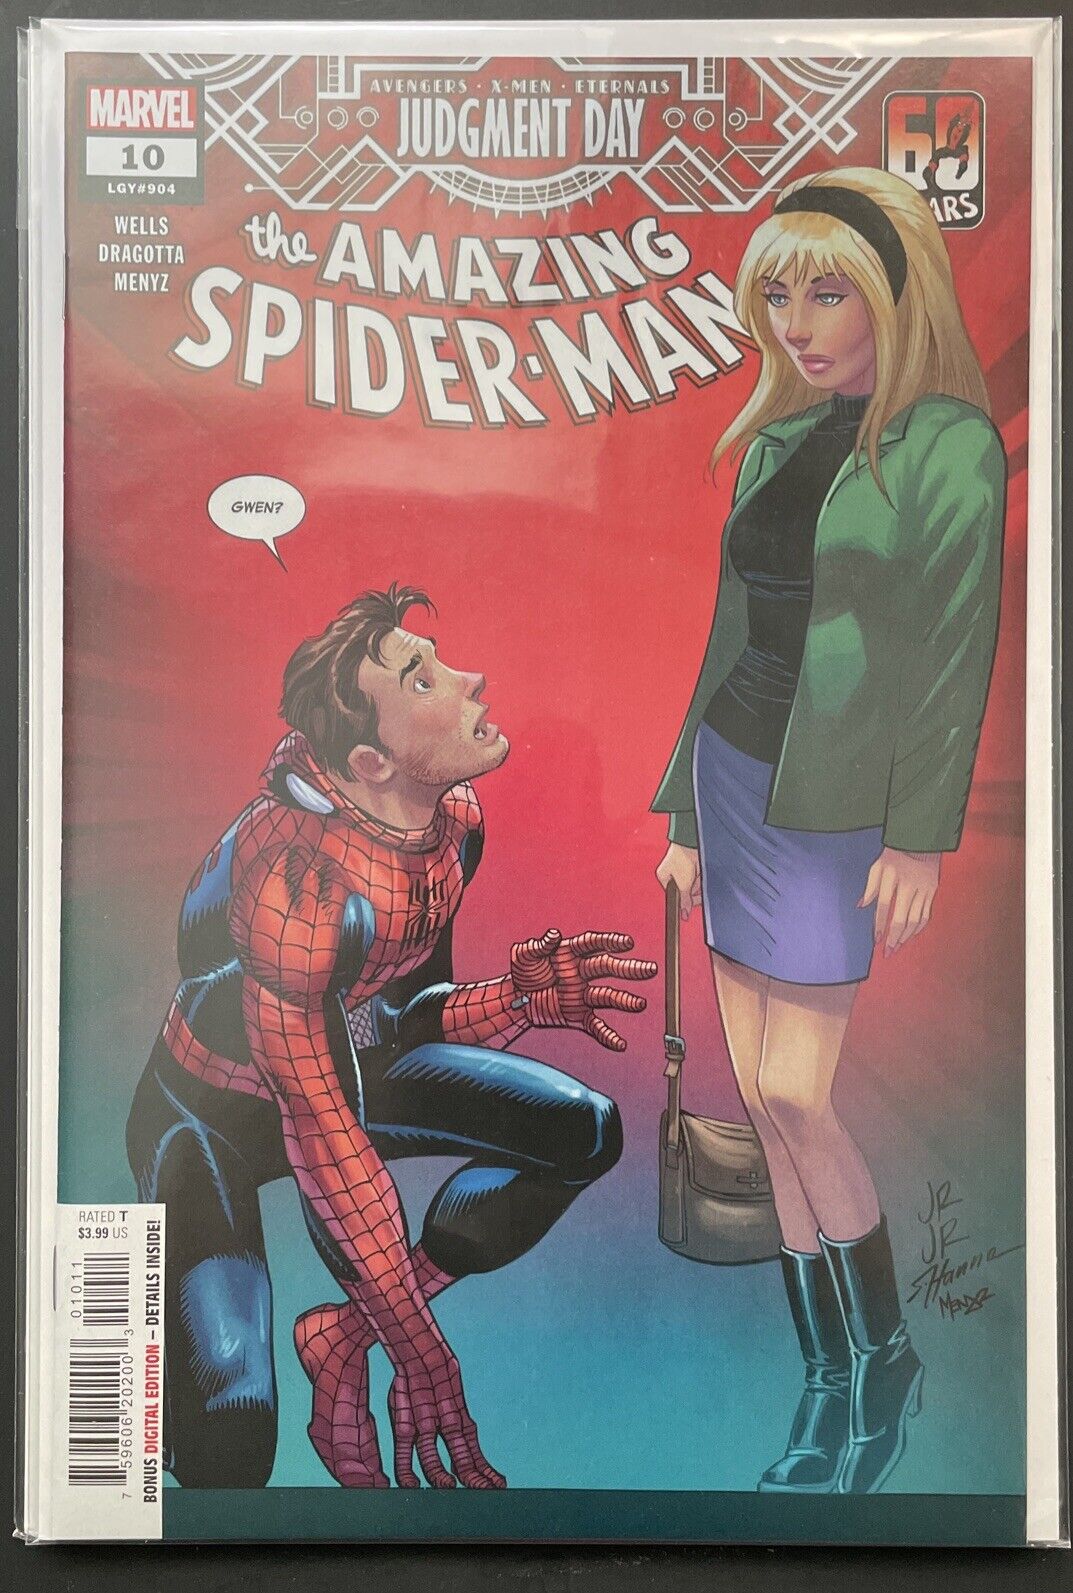 Amazing Spider-Man  #10 Vol 5 Cover A John Romita Jr. (A.X.E. Judgment Day) 2022